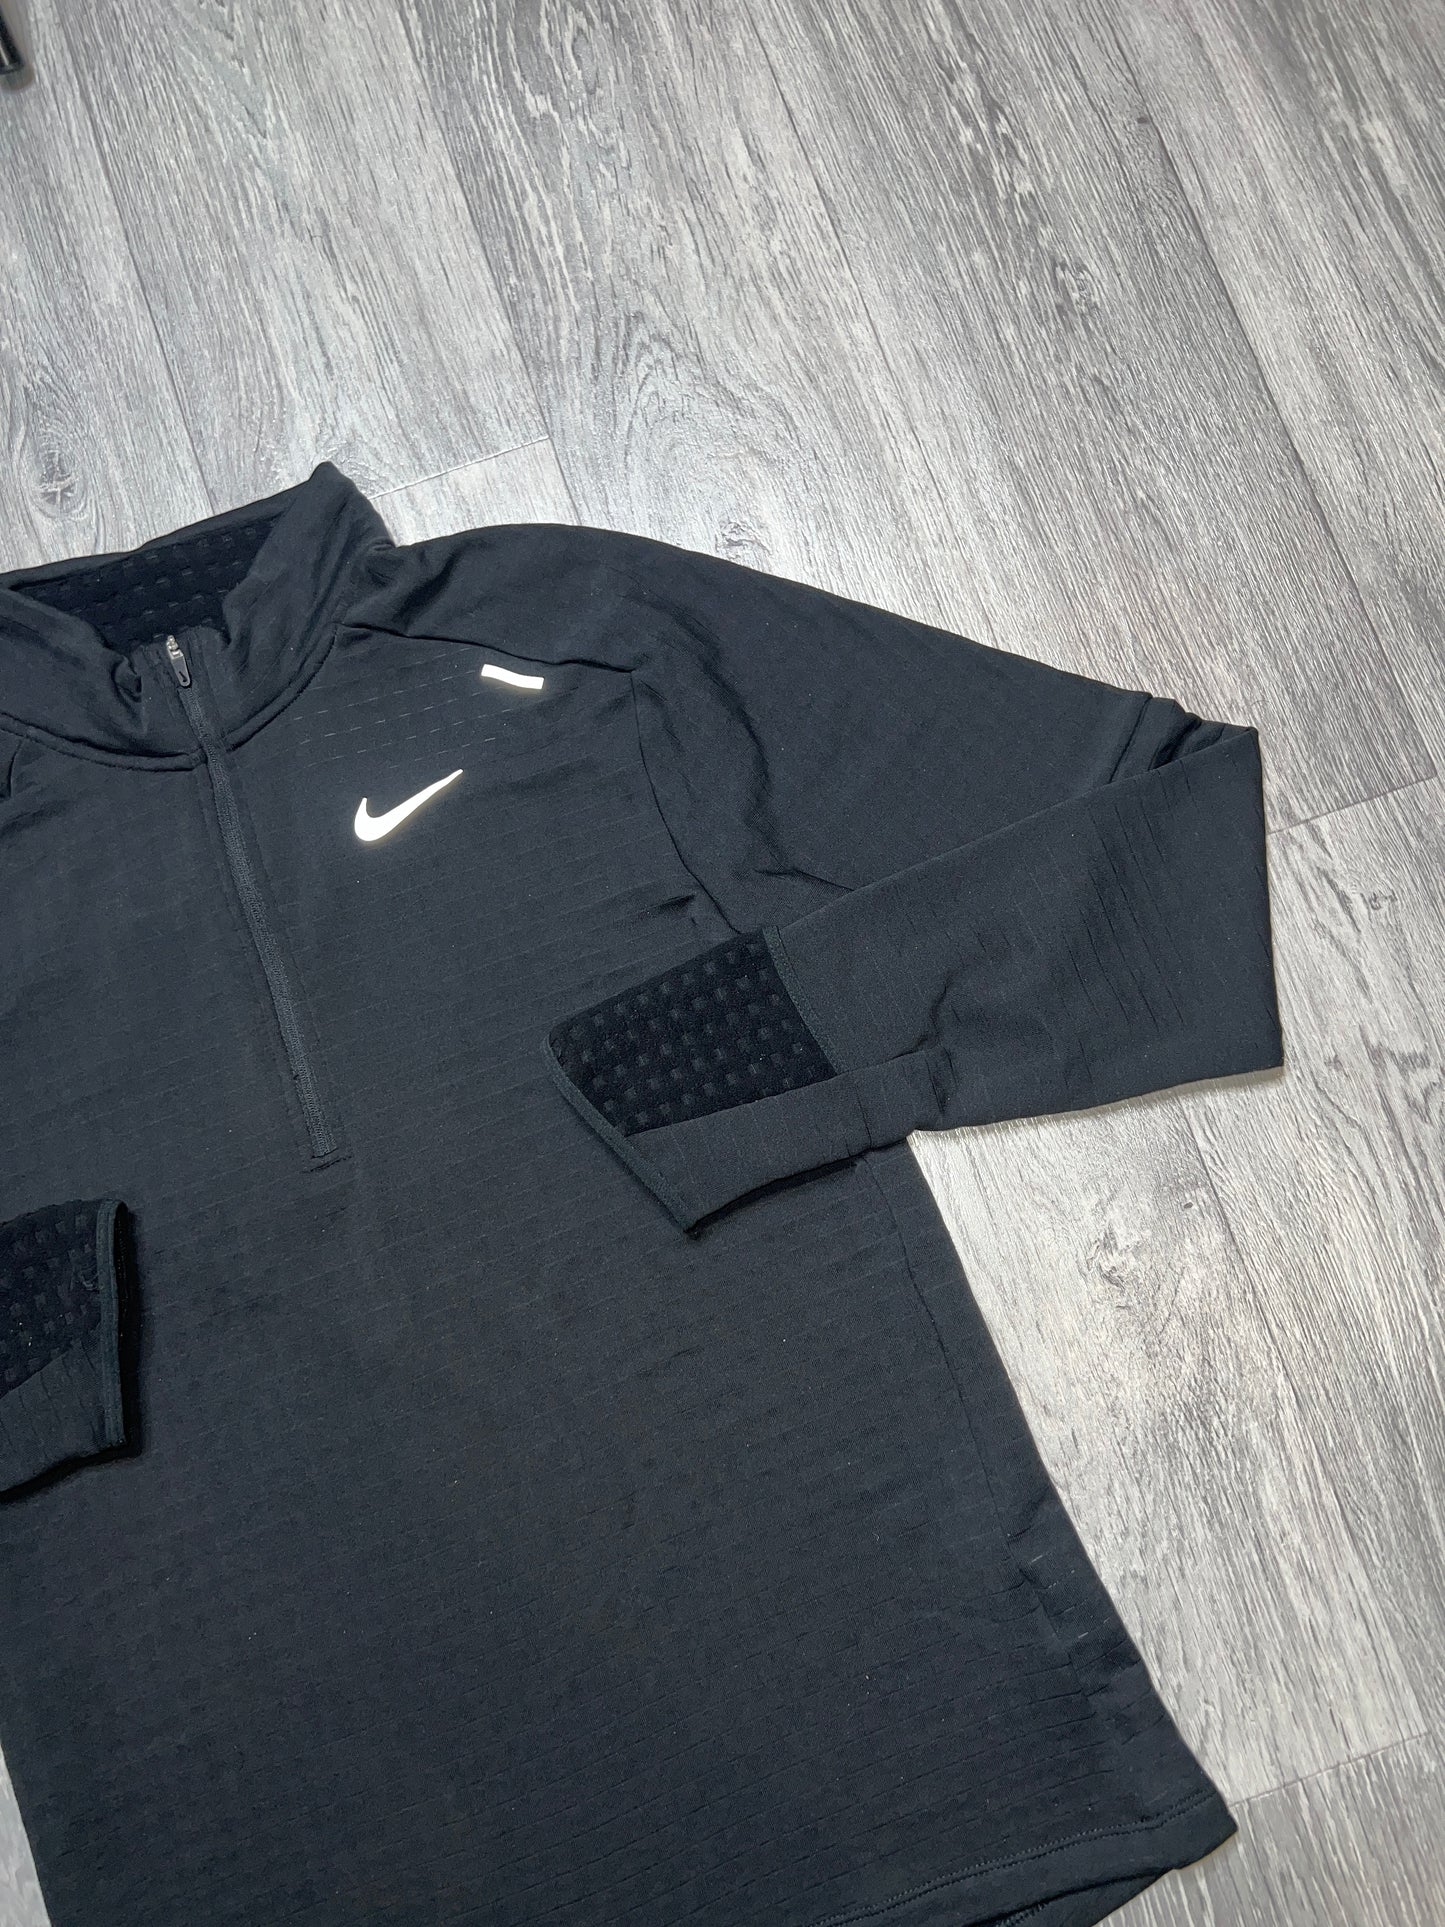 Nike Running Element Half Zip Black